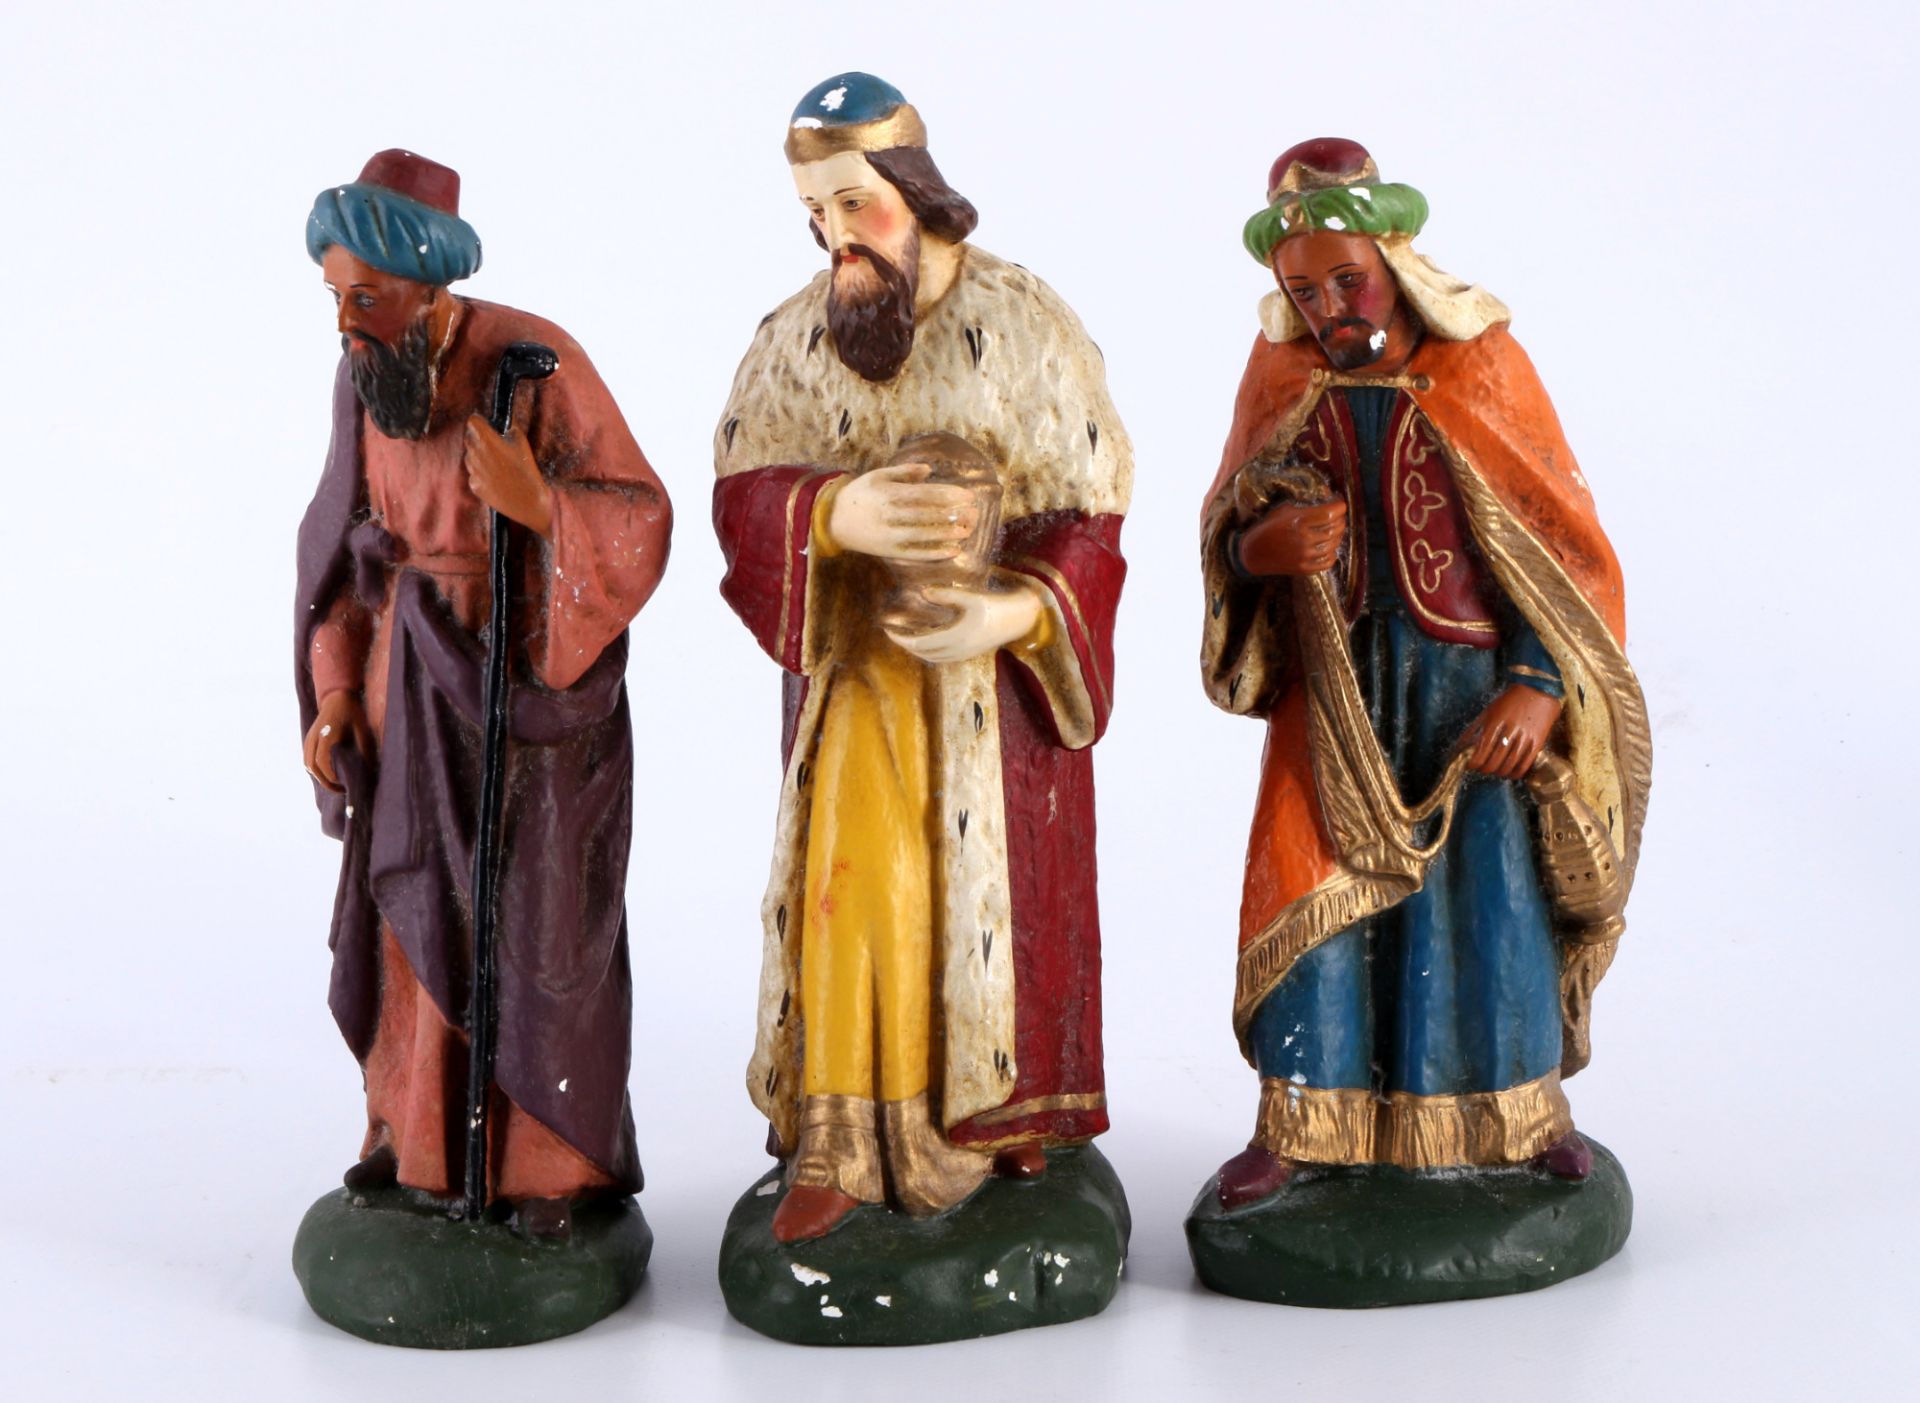 Nativity figure collection 18-piece, monogrammed J.ST., Krippenfiguren Sammlung, - Image 3 of 6